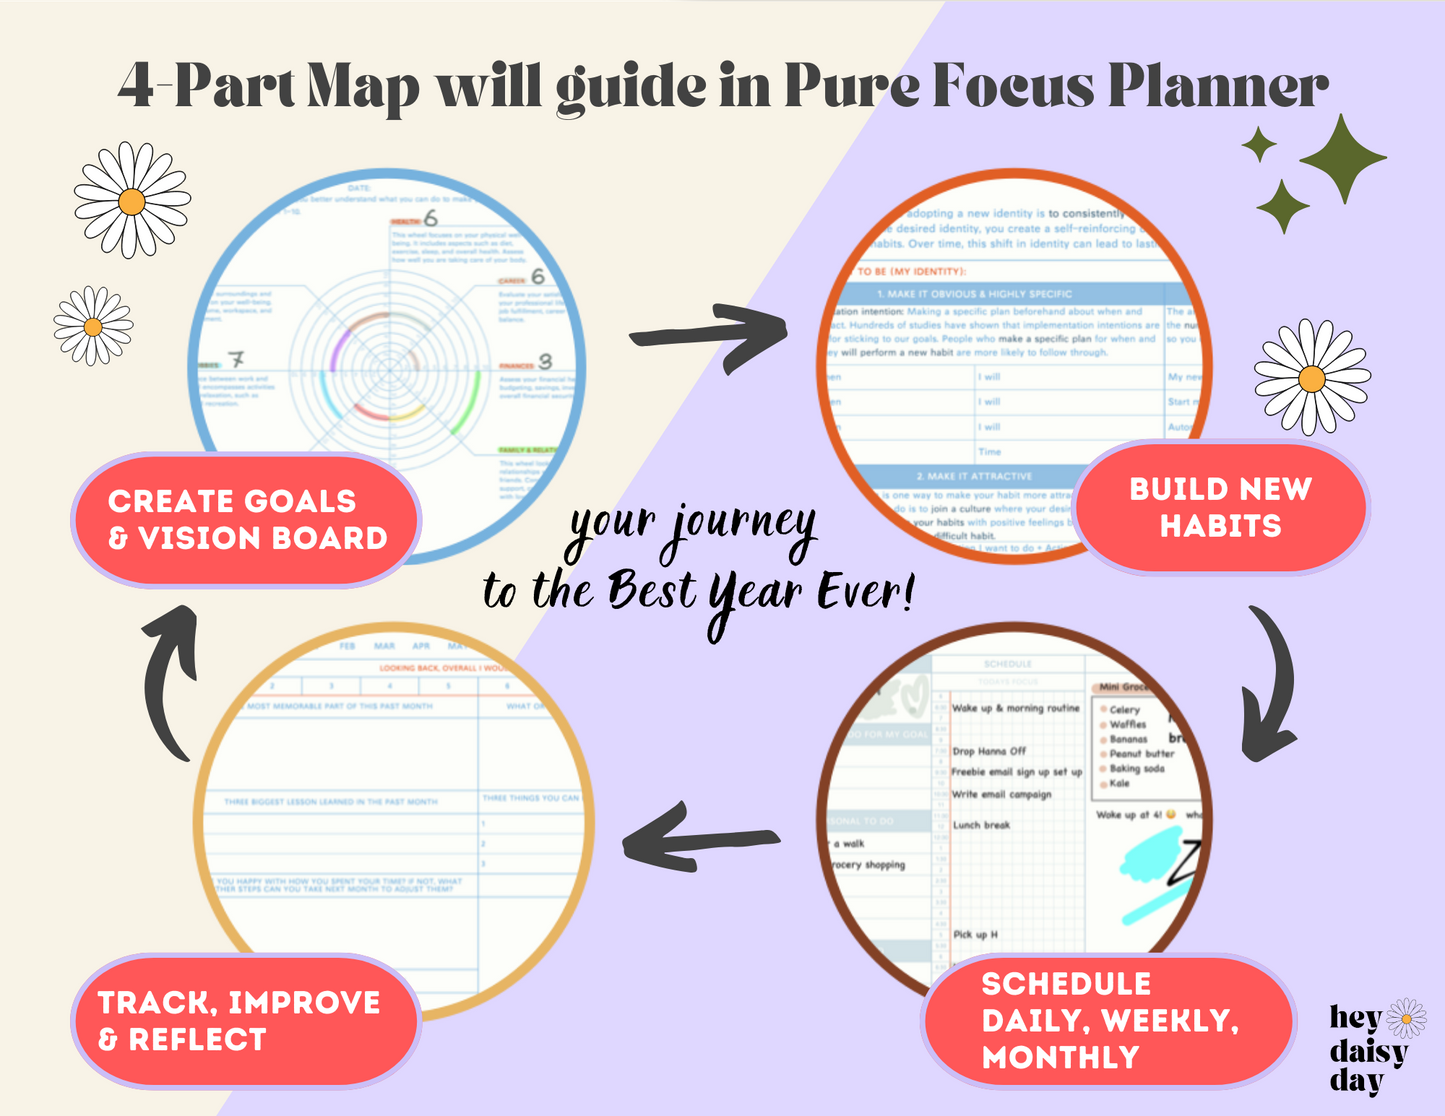 2024 Pure Focus Digital Planner - Dark